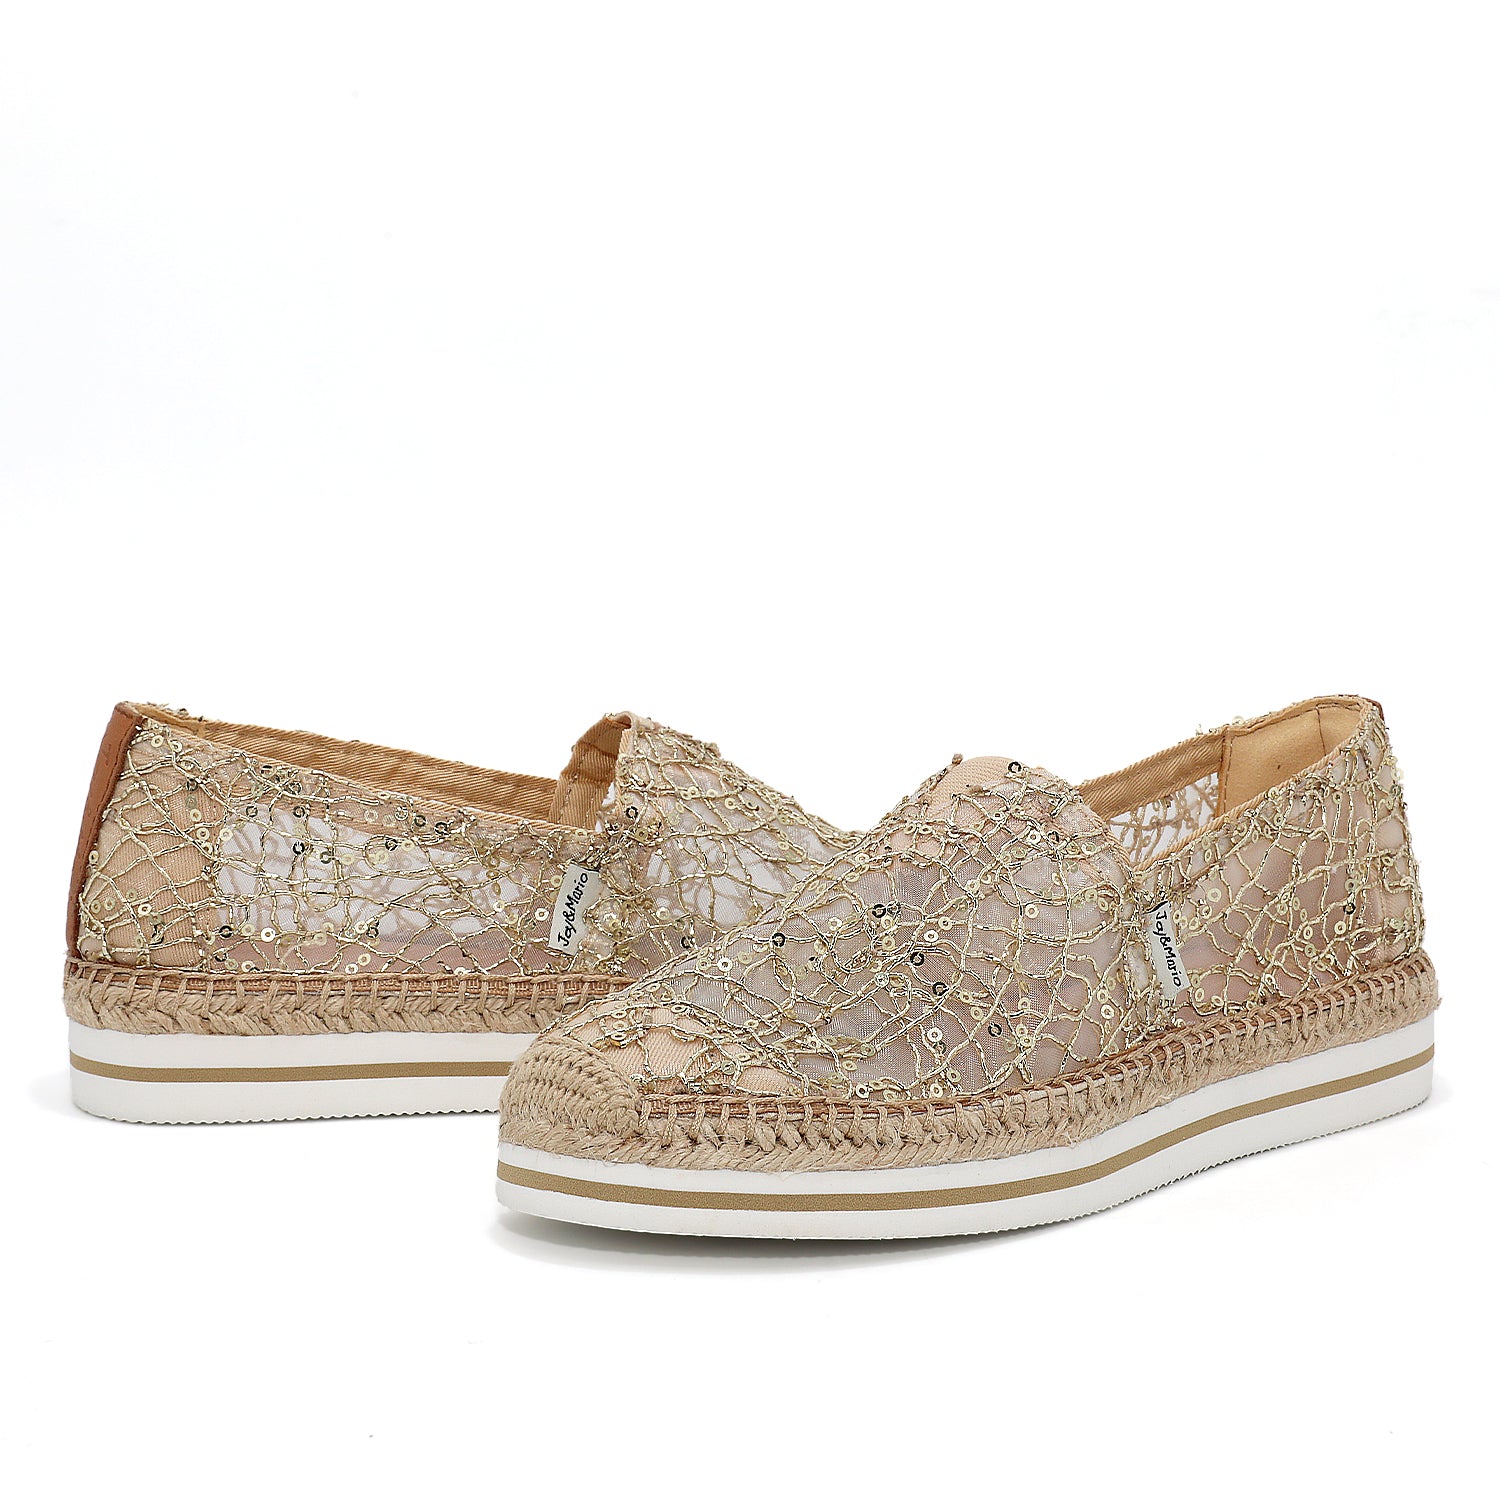 JOY&MARIO Handmade Women’s Slip-On Espadrille Mesh Loafers Platform in Gold-A51393W